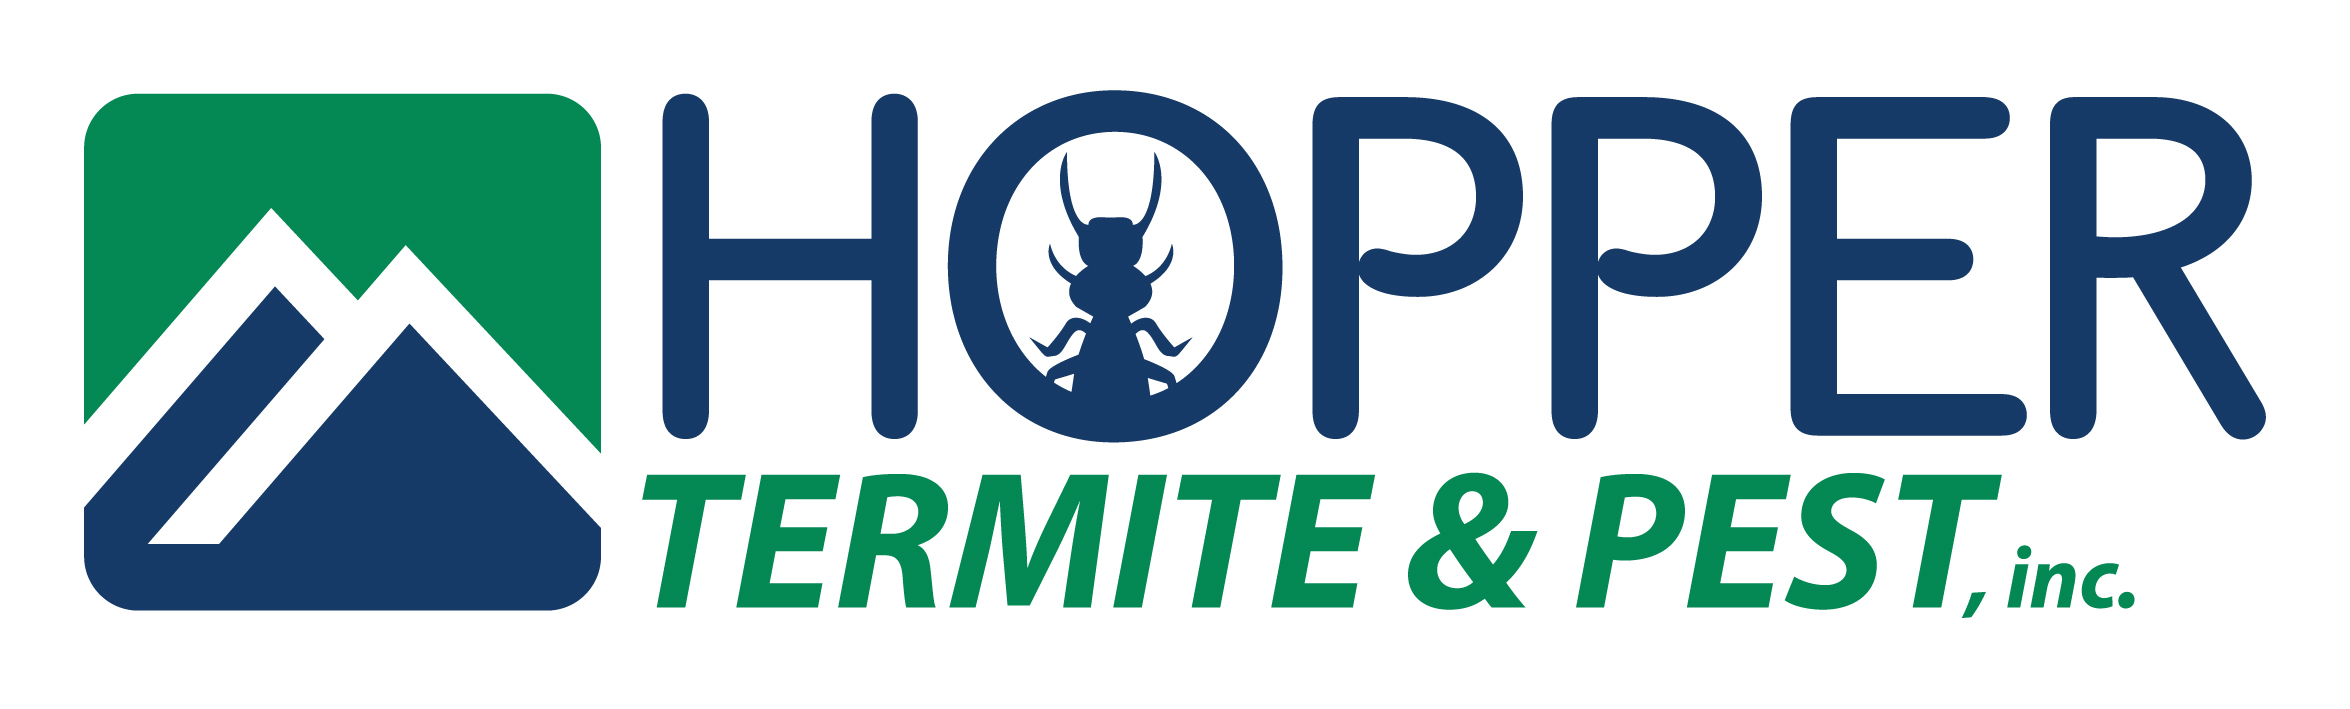 Hopper Environmental Services, Inc.